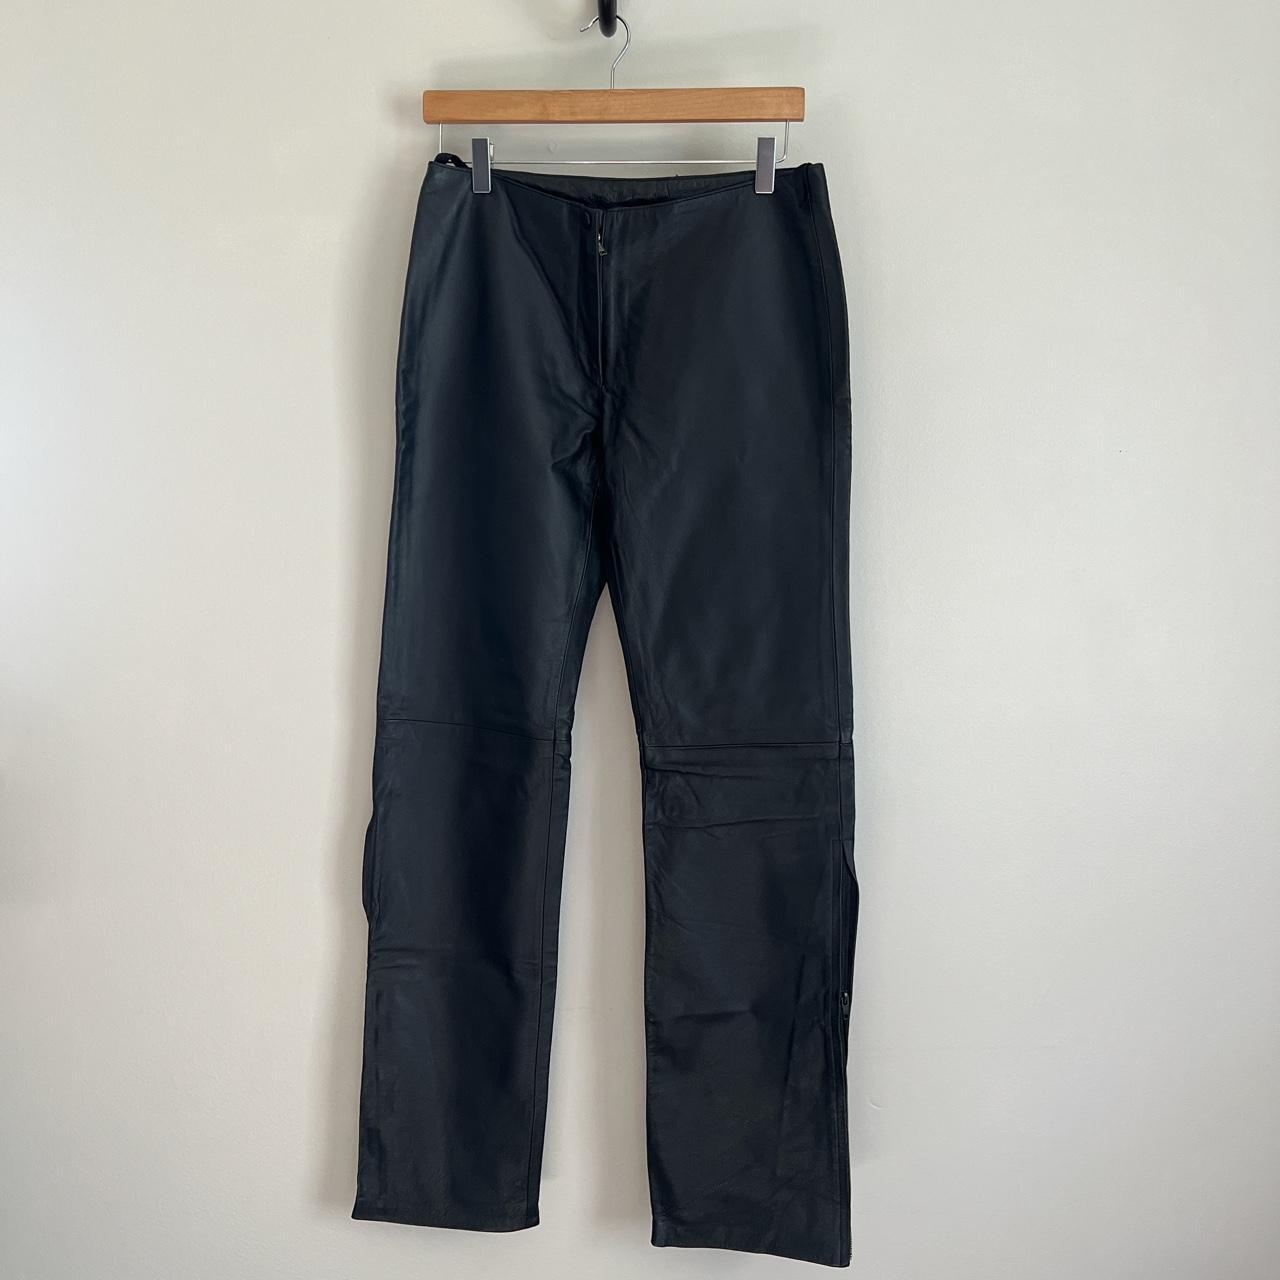 LOBI vintage leather pants w/ special linen... - Depop